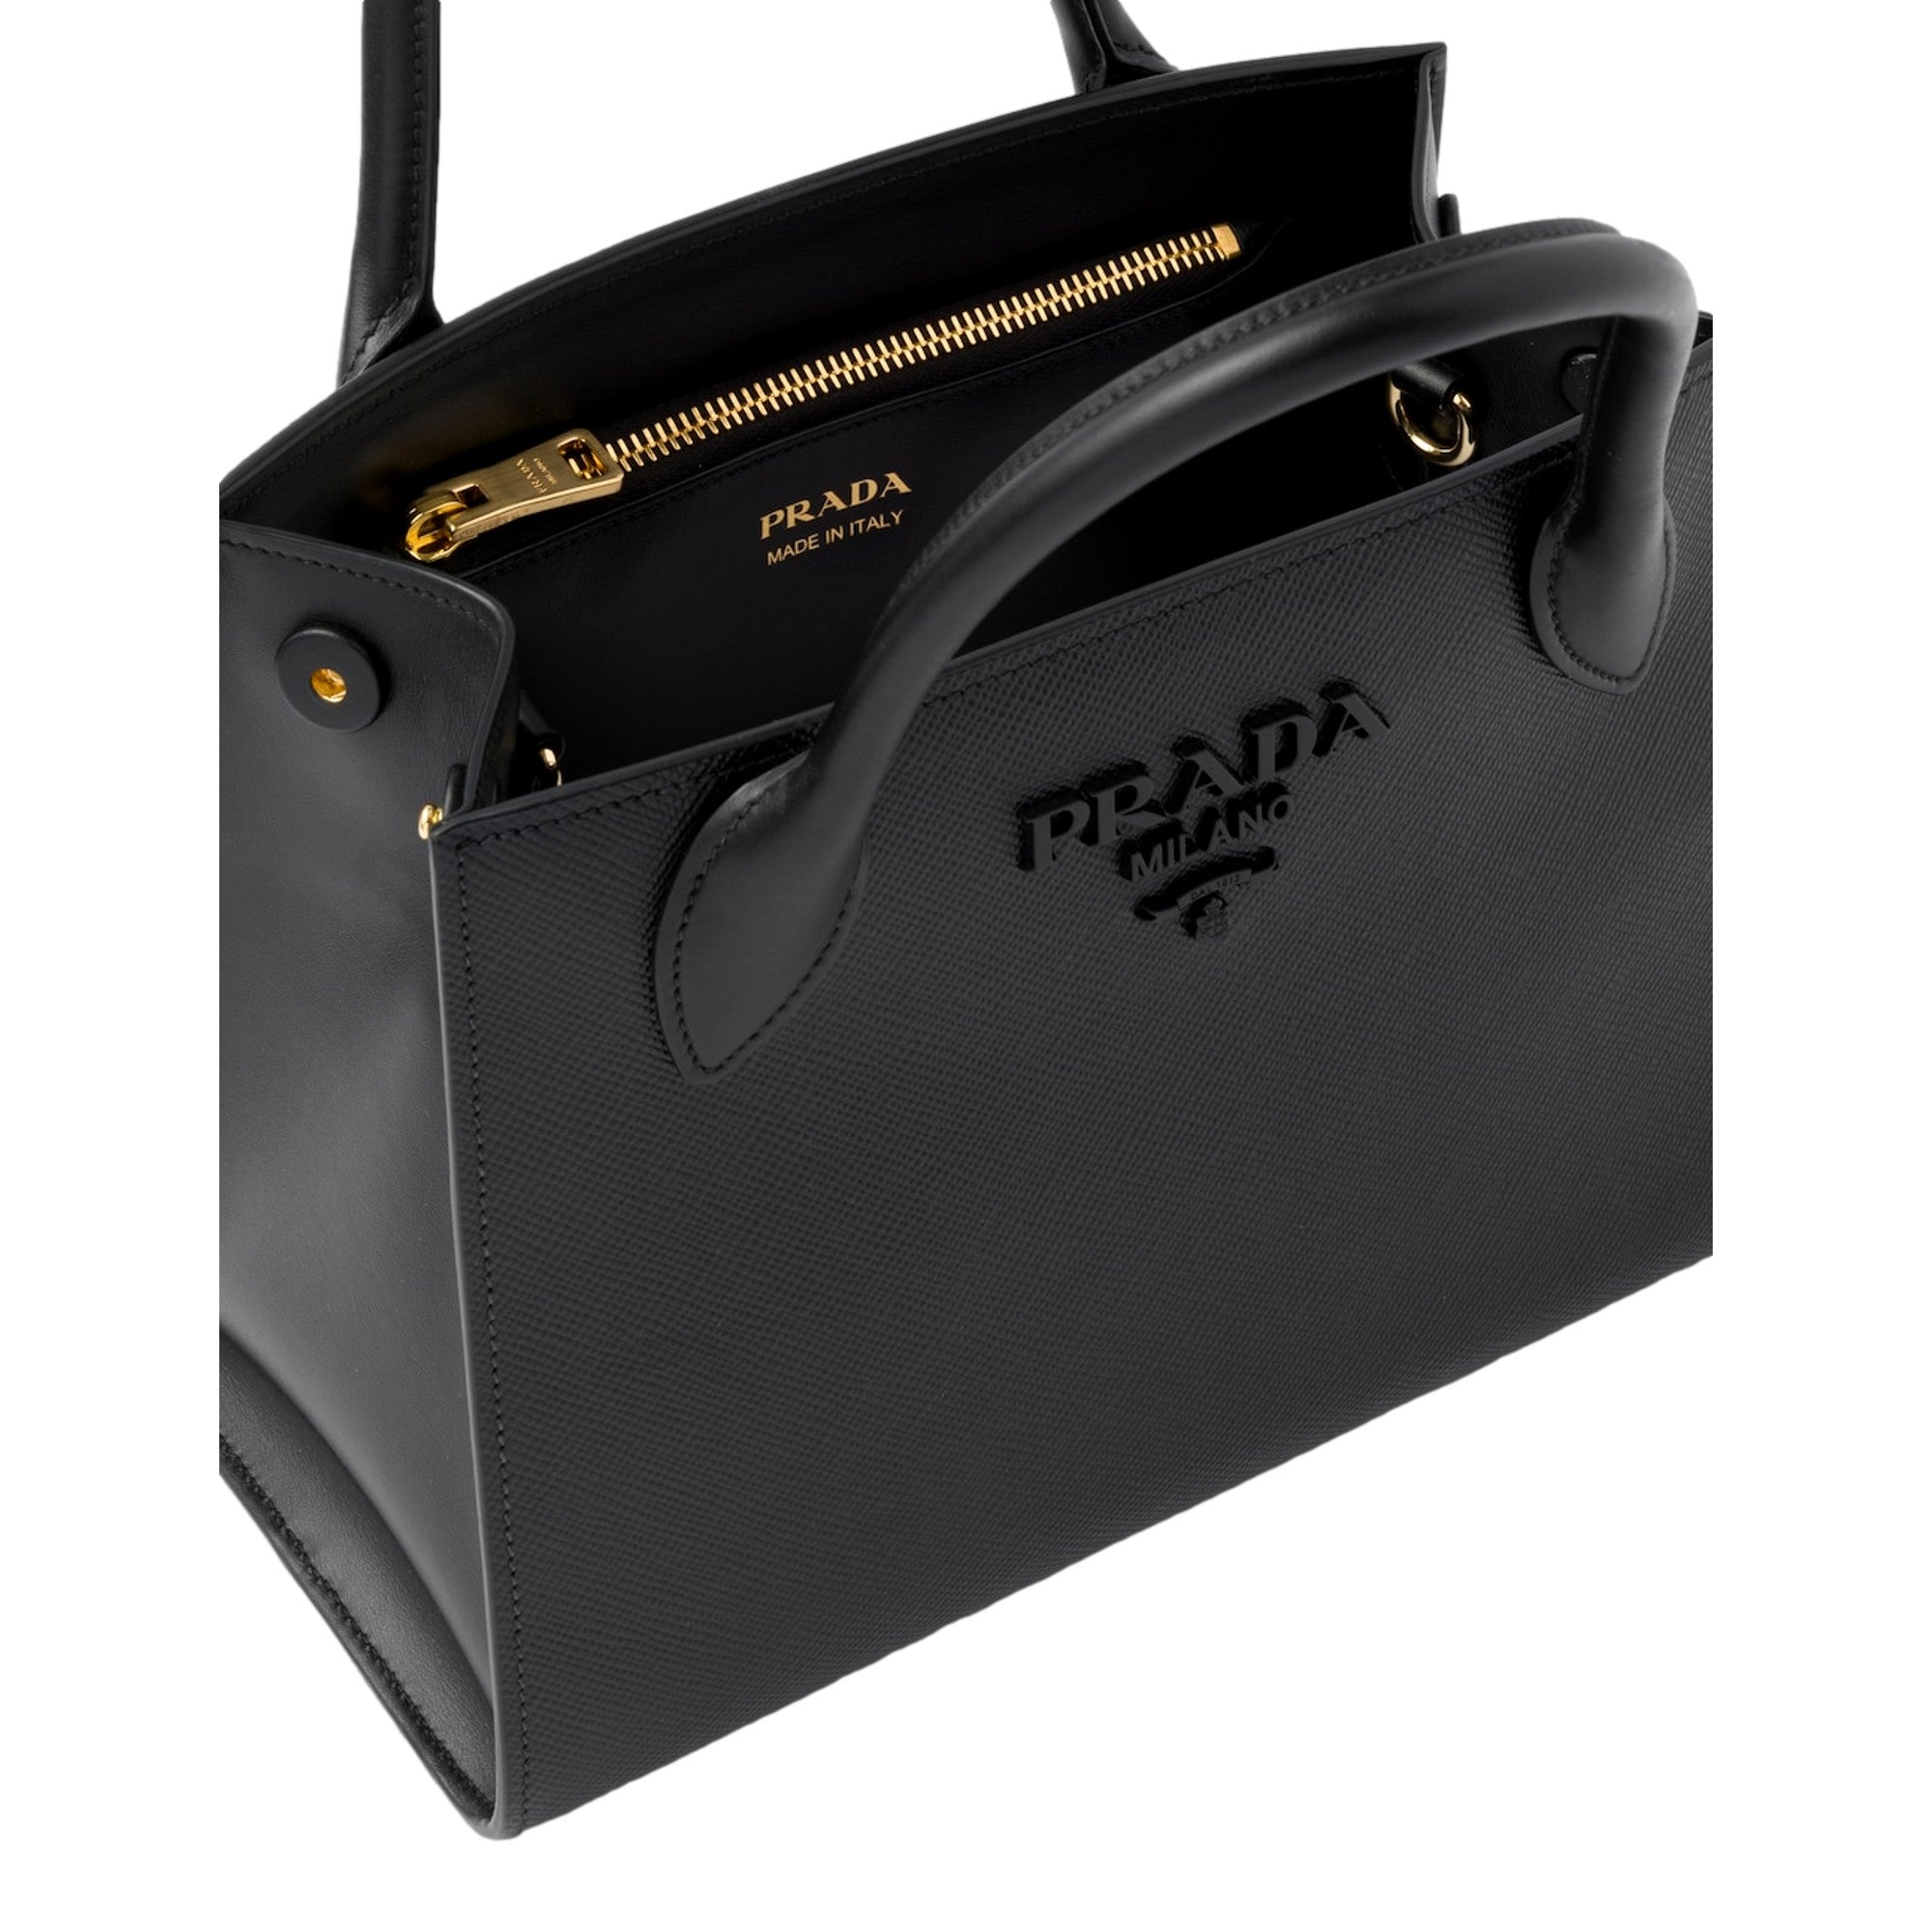 Prada Monochrome Saffiano Top Handle Crossbody Tote Bag Black